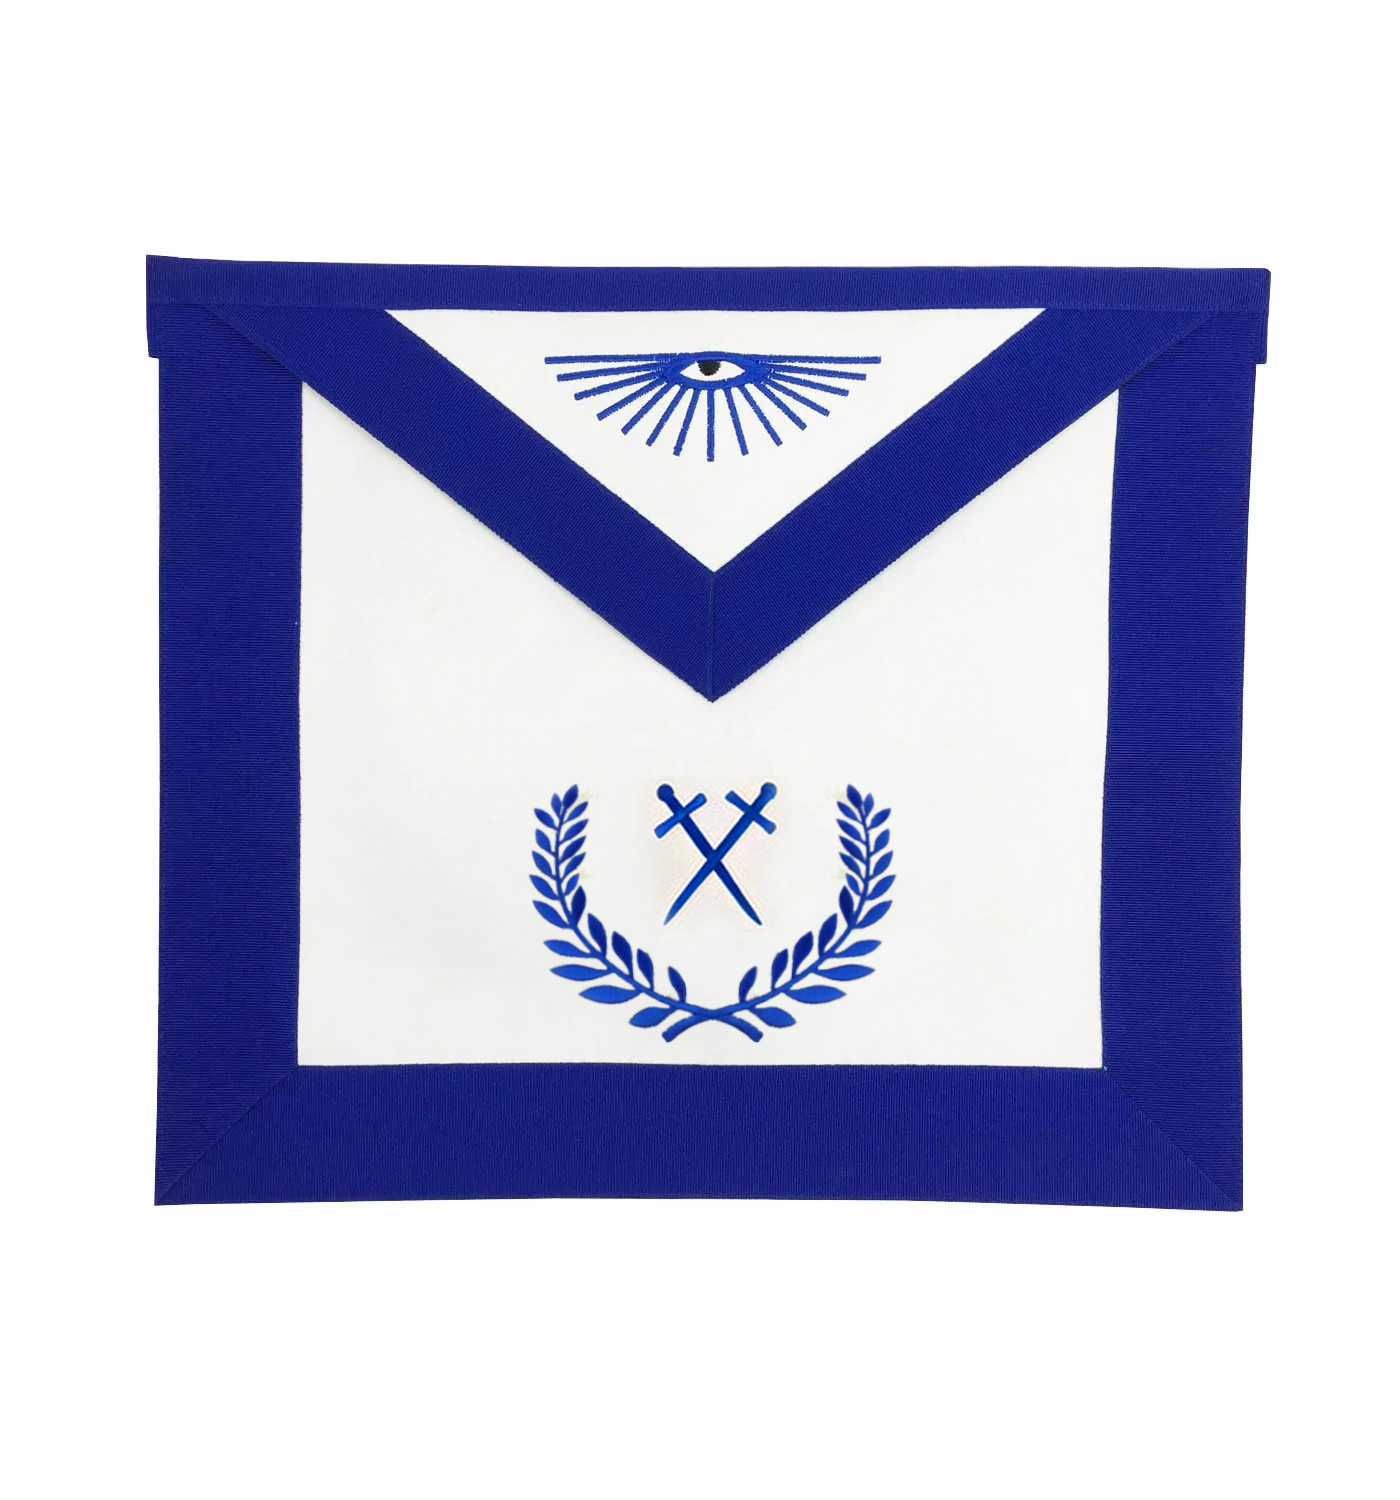 Sentinel Blue Lodge Officer Apron - Royal Blue with Wreath - Bricks Masons